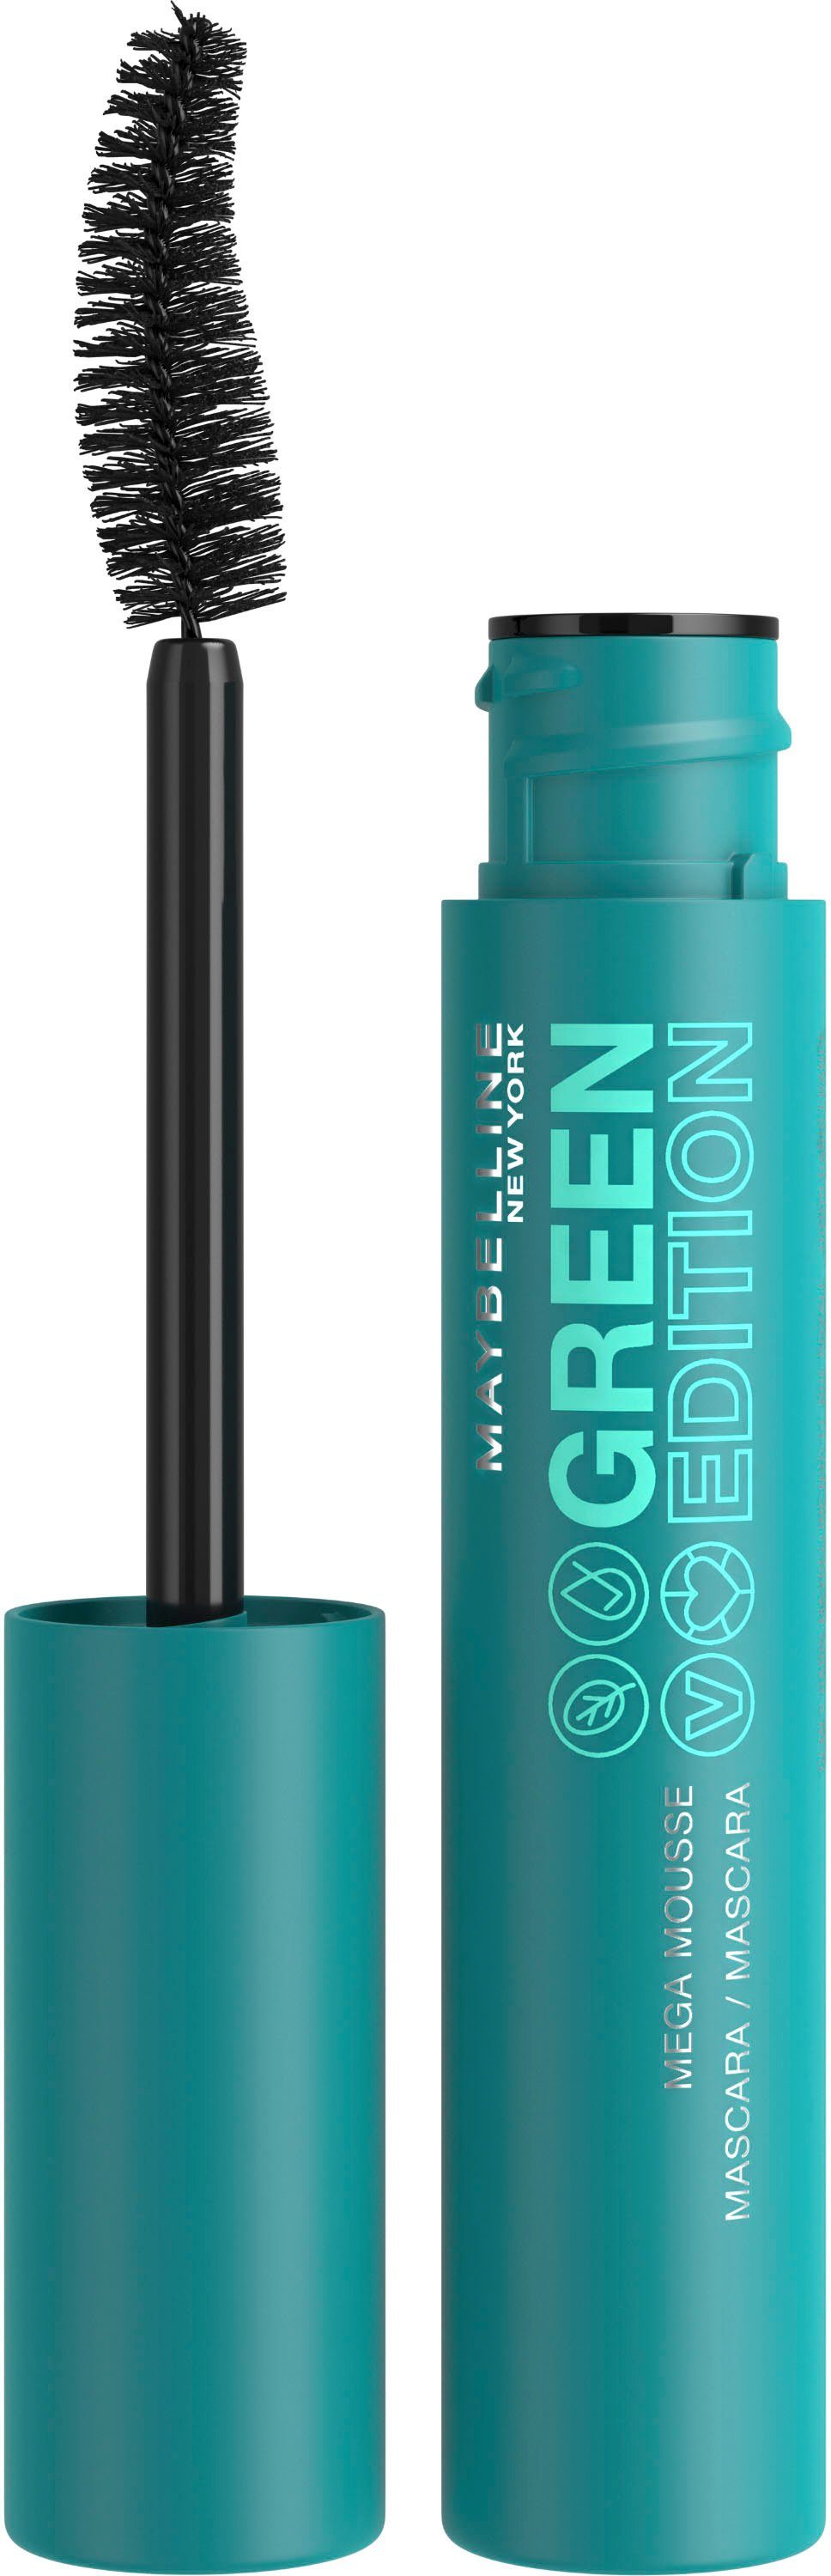 Neue Ware eingetroffen Edition braun 003 NEW MAYBELLINE YORK Green WSH Mega Mascara Mousse Mascara